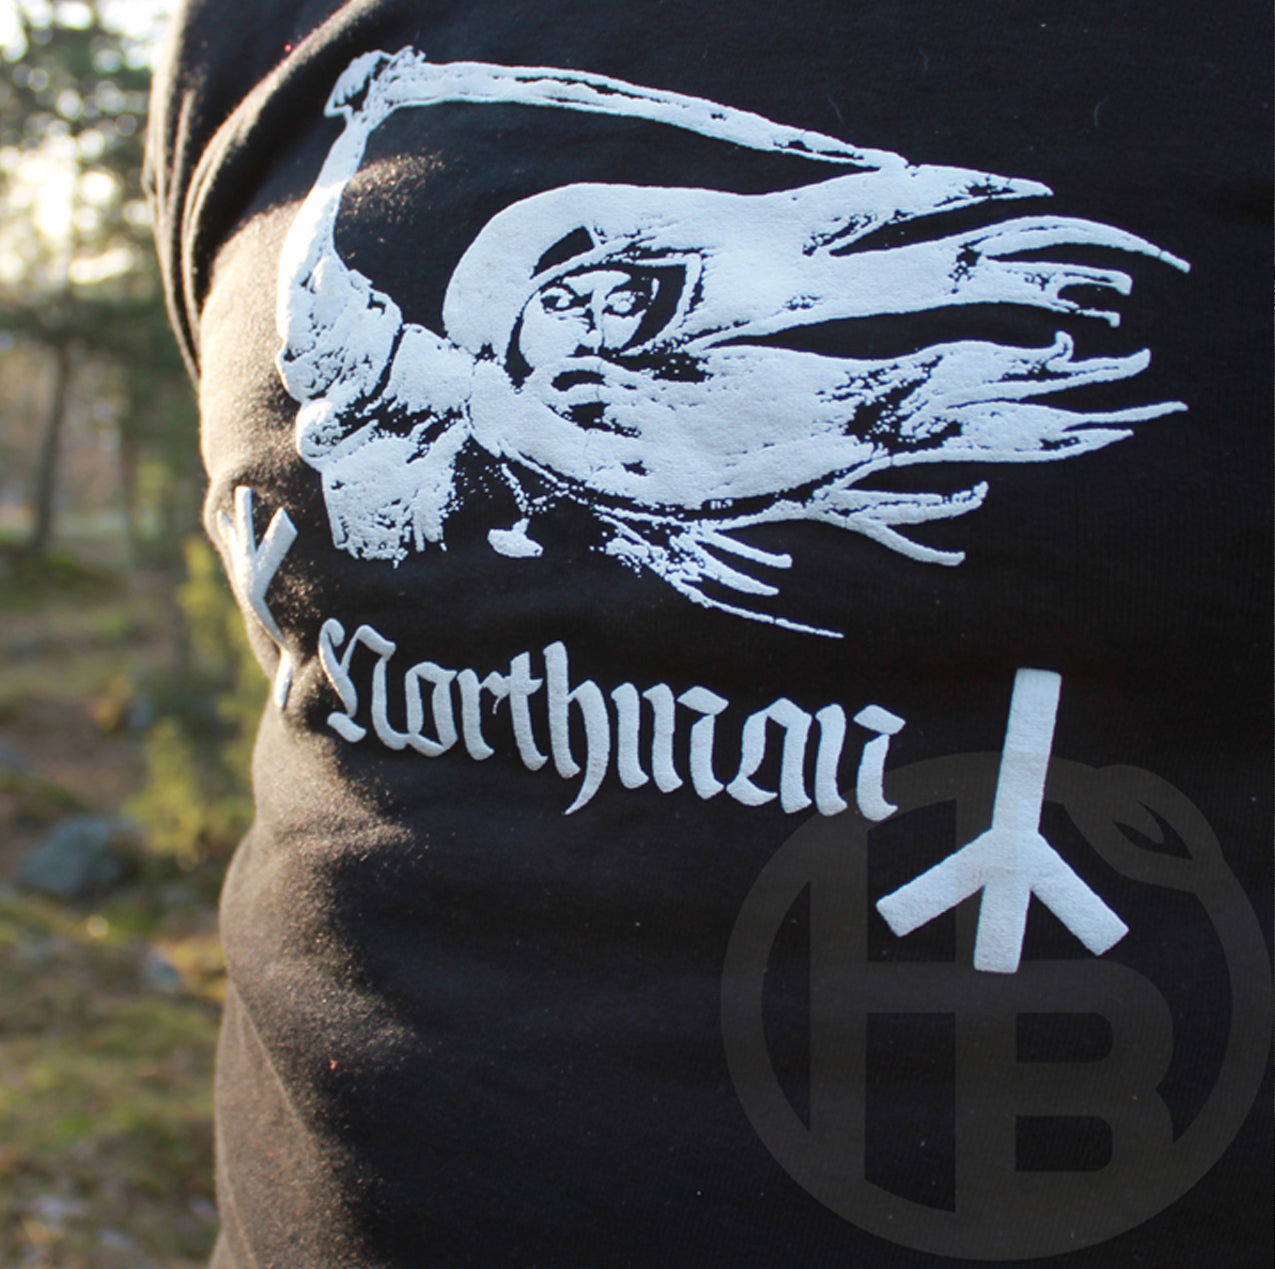 Classic Northman t-shirt